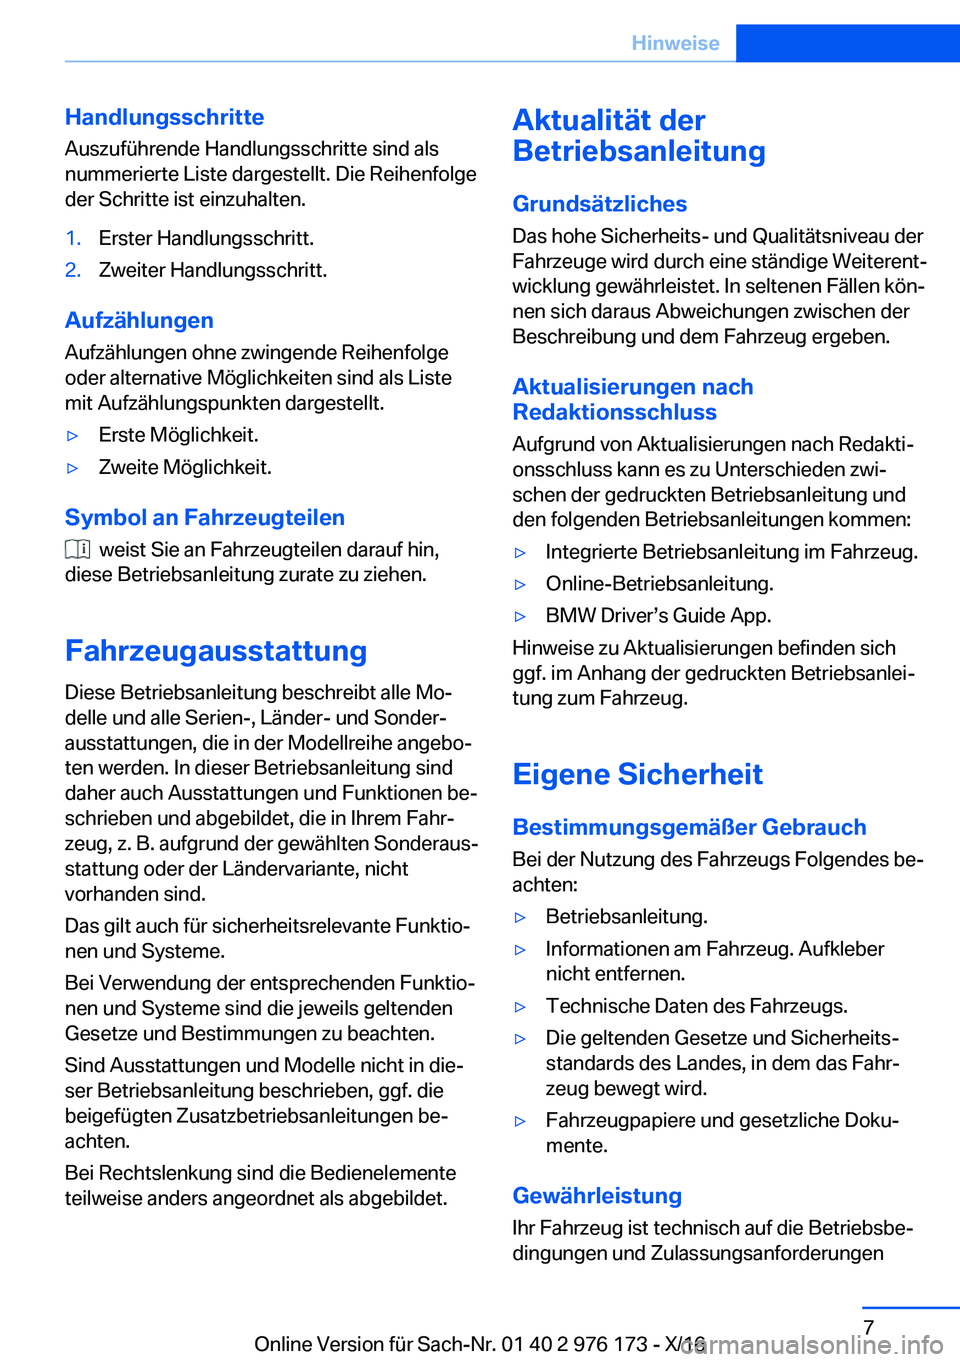 BMW X5 M 2017  Betriebsanleitungen (in German) �H�a�n�d�l�u�n�g�s�s�c�h�r�i�t�t�e�A�u�s�z�u�f�ü�h�r�e�n�d�e� �H�a�n�d�l�u�n�g�s�s�c�h�r�i�t�t�e� �s�i�n�d� �a�l�s�n�u�m�m�e�r�i�e�r�t�e� �L�i�s�t�e� �d�a�r�g�e�s�t�e�l�l�t�.� �D�i�e� �R�e�i�h�e�n�f�